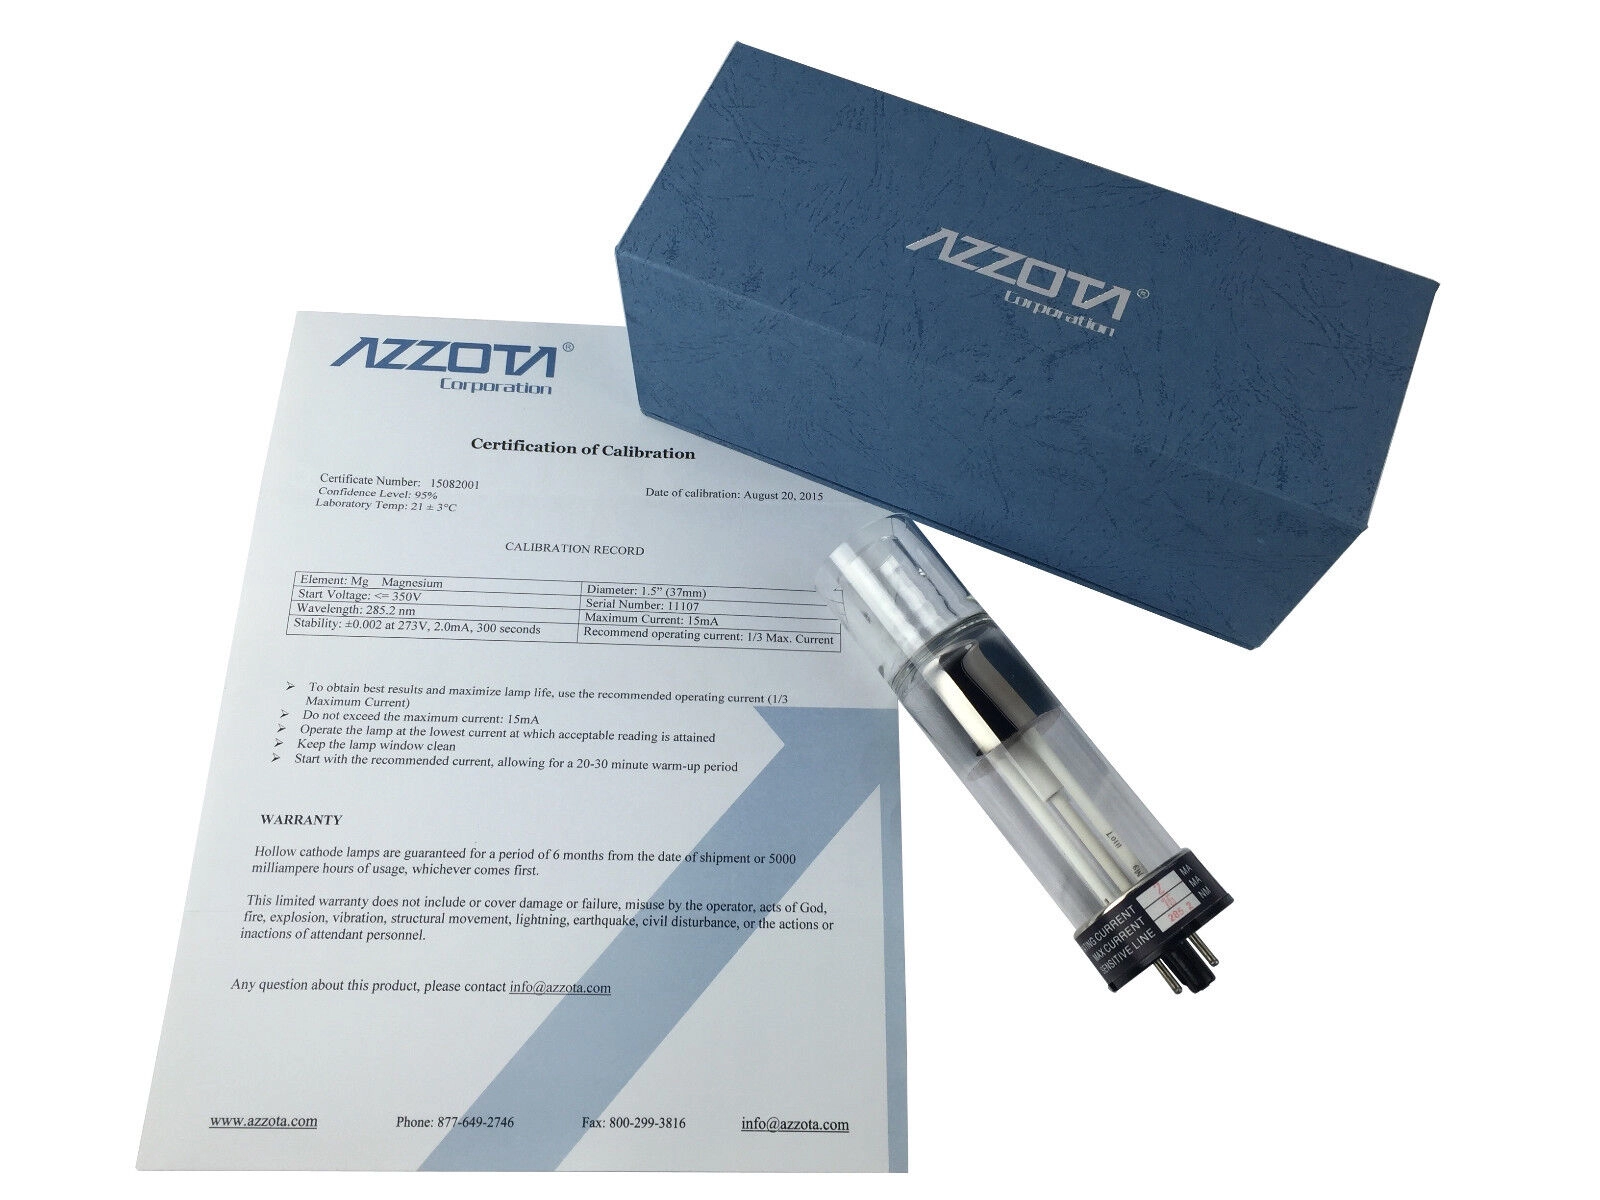 Azzota® 1.5 Hollow Cathode Lamp (HCL) Titanium (Ti